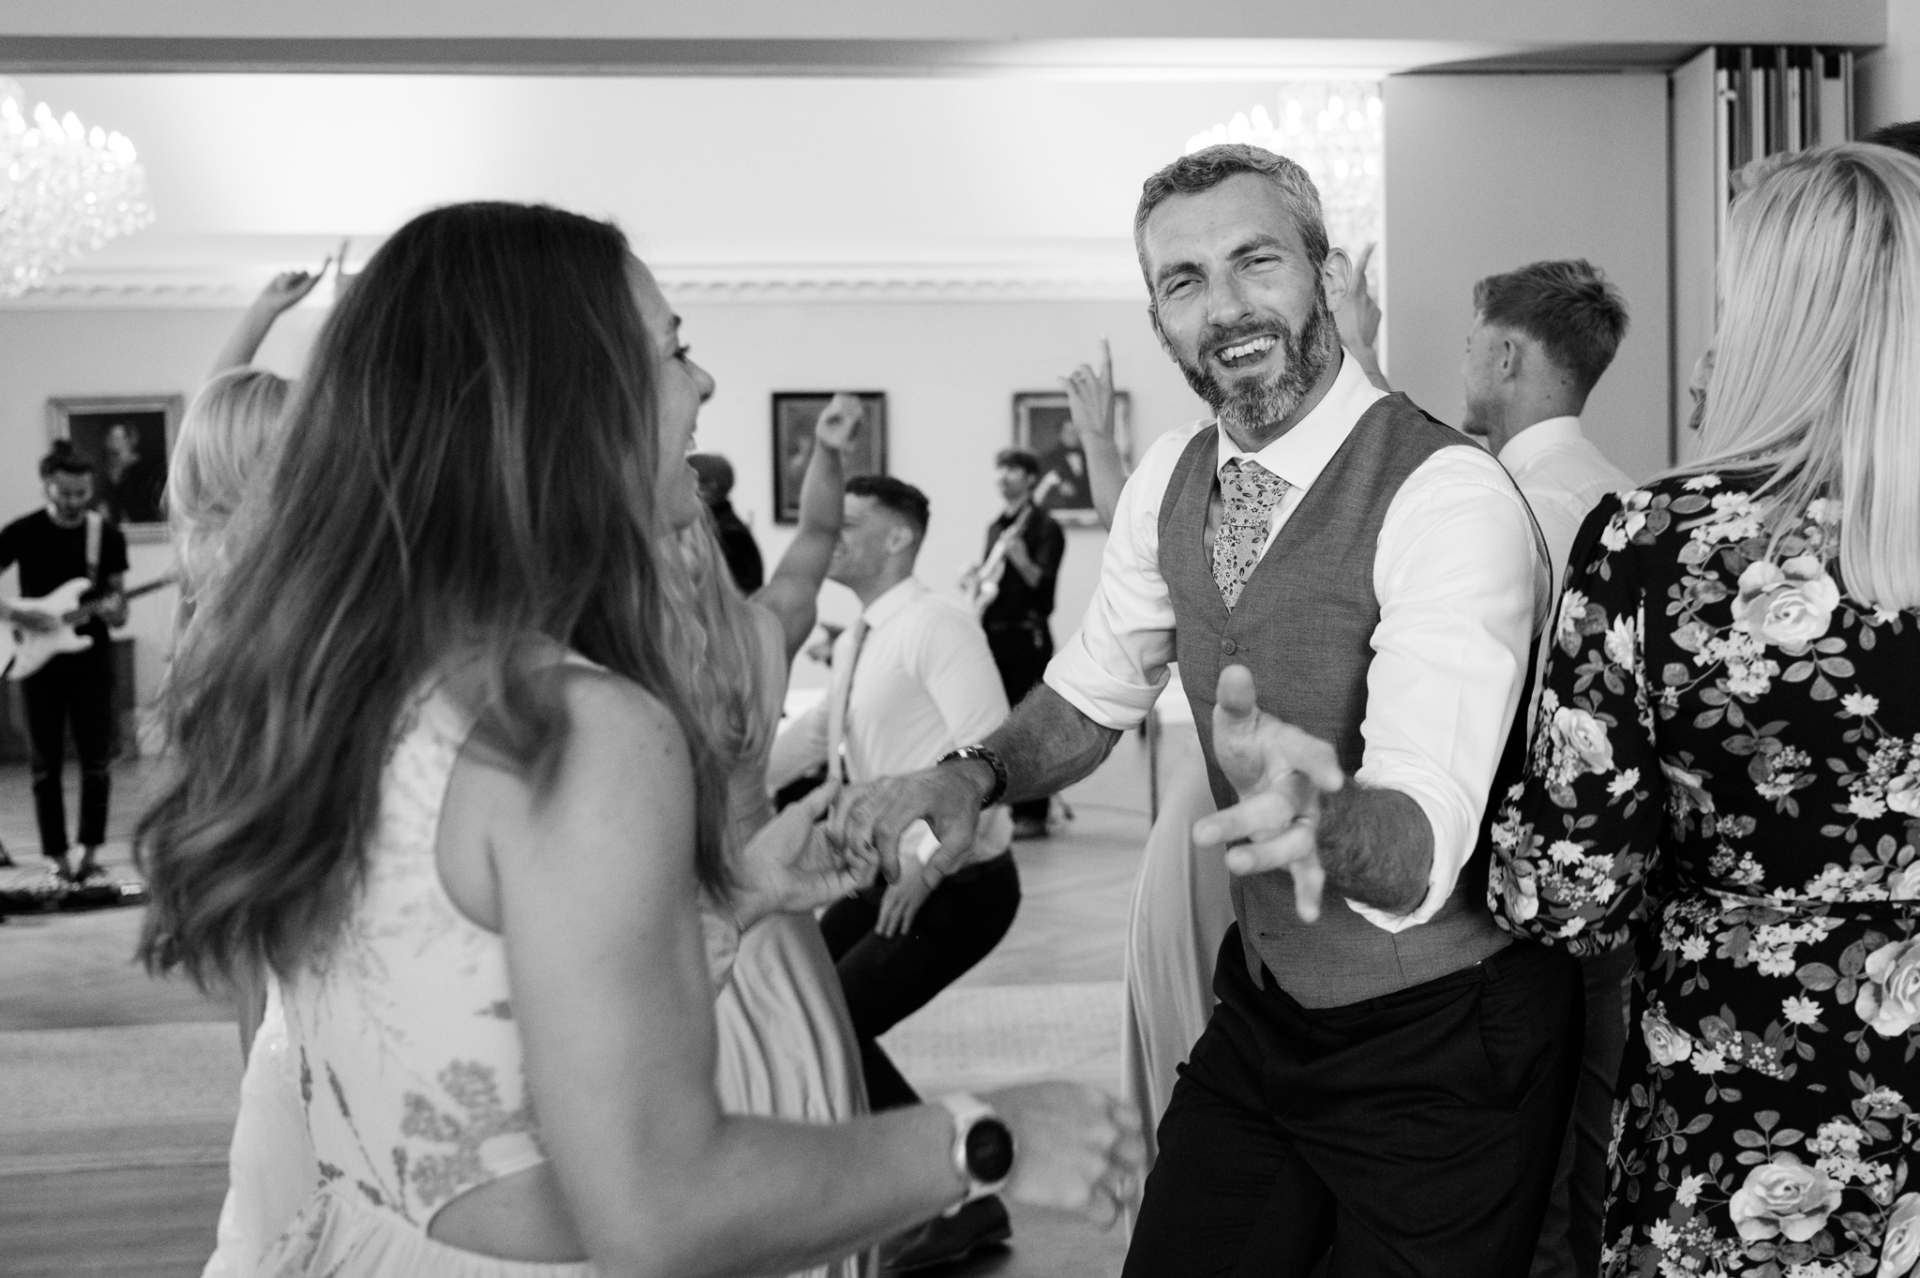 Wedding guest showing off moves on dancefloor